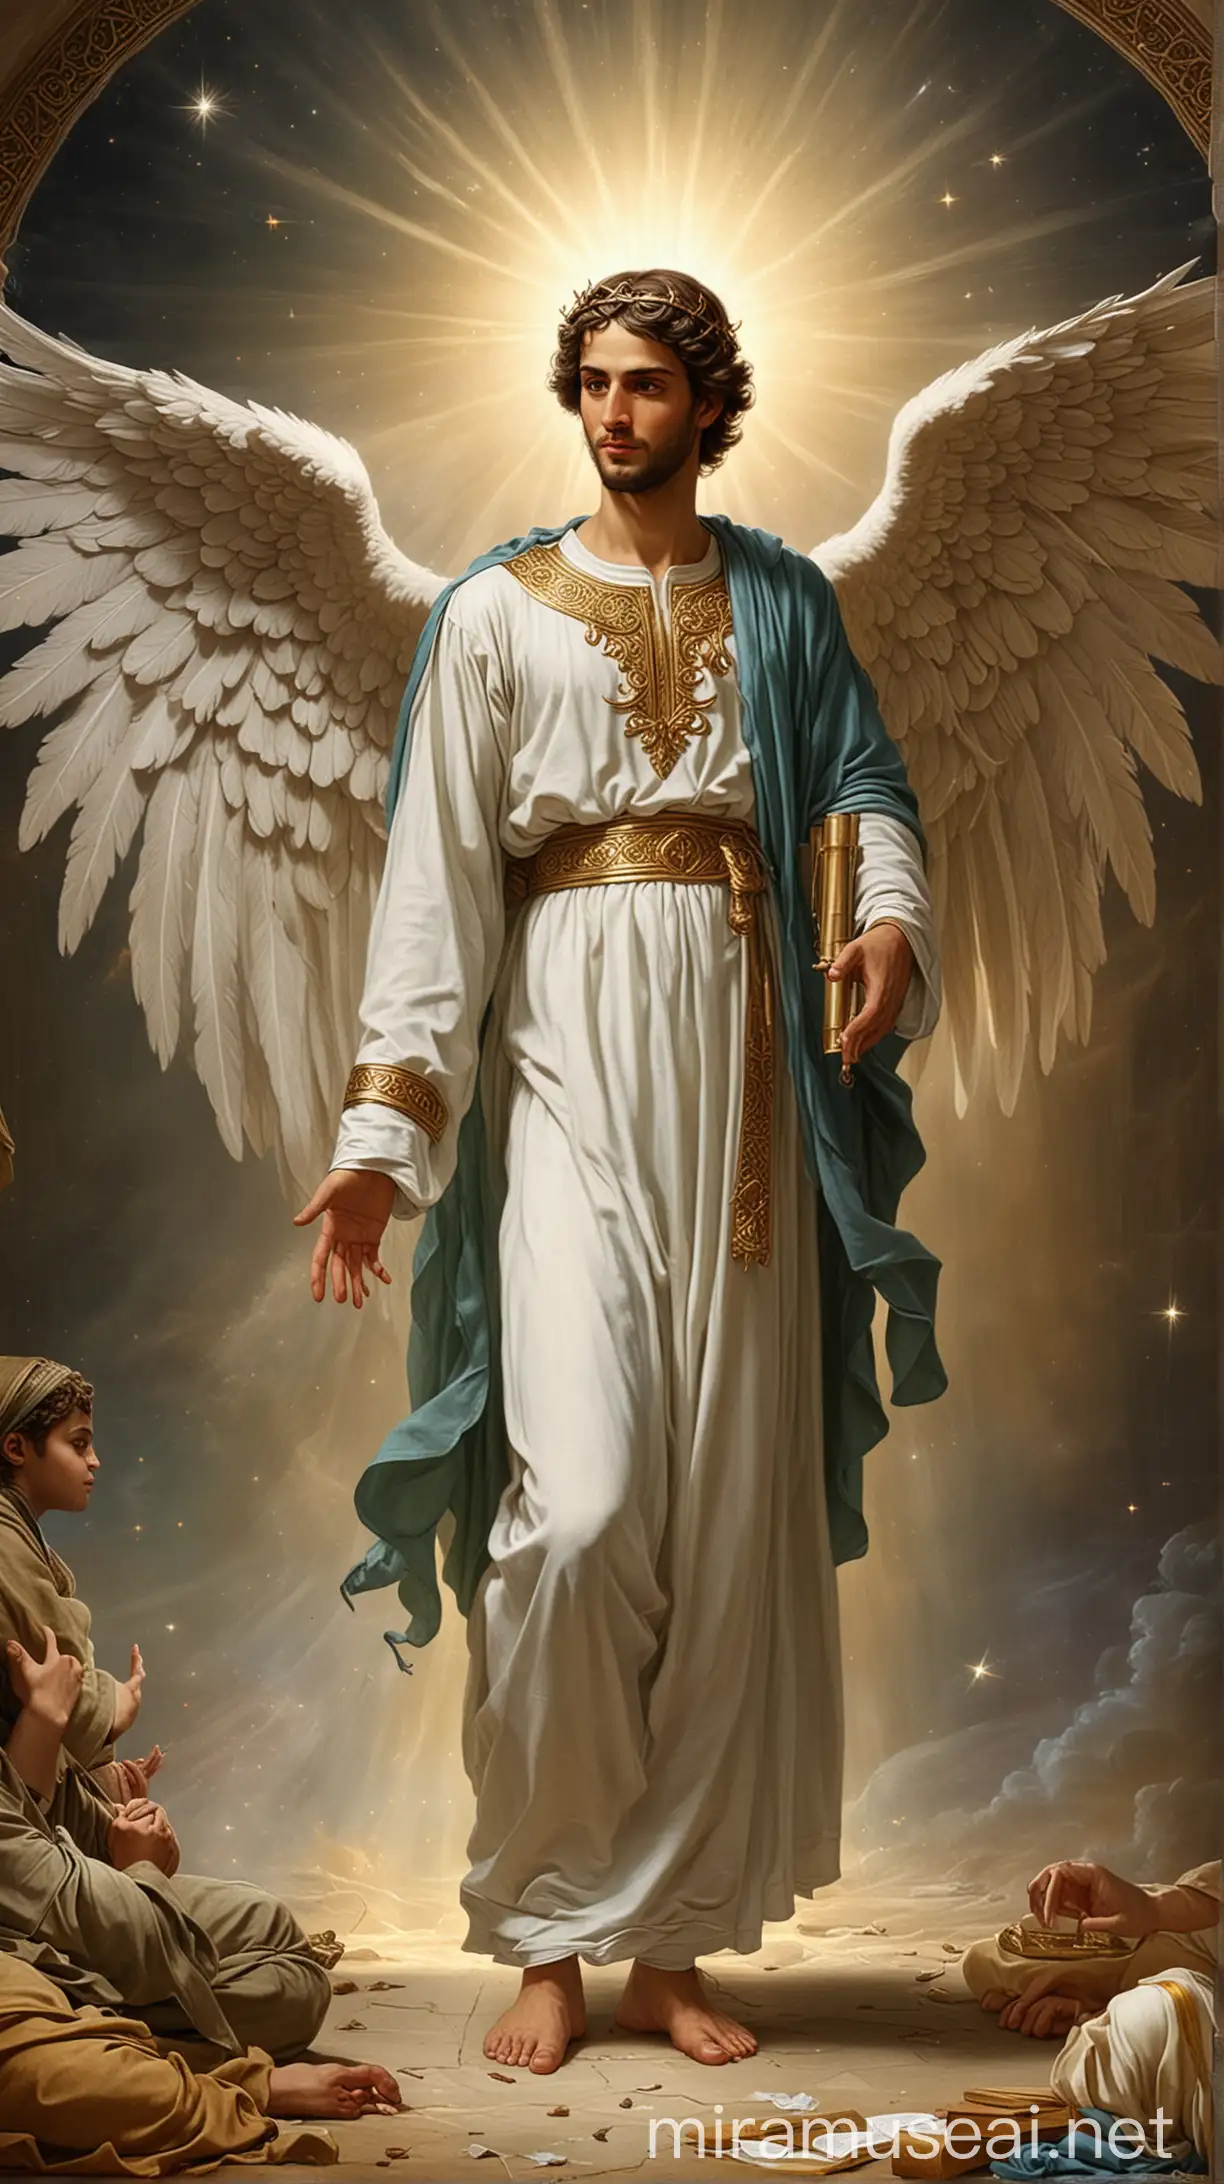 Divine Encounter Archangel Gabriel and Prophet Muhammad in Illuminated Glory